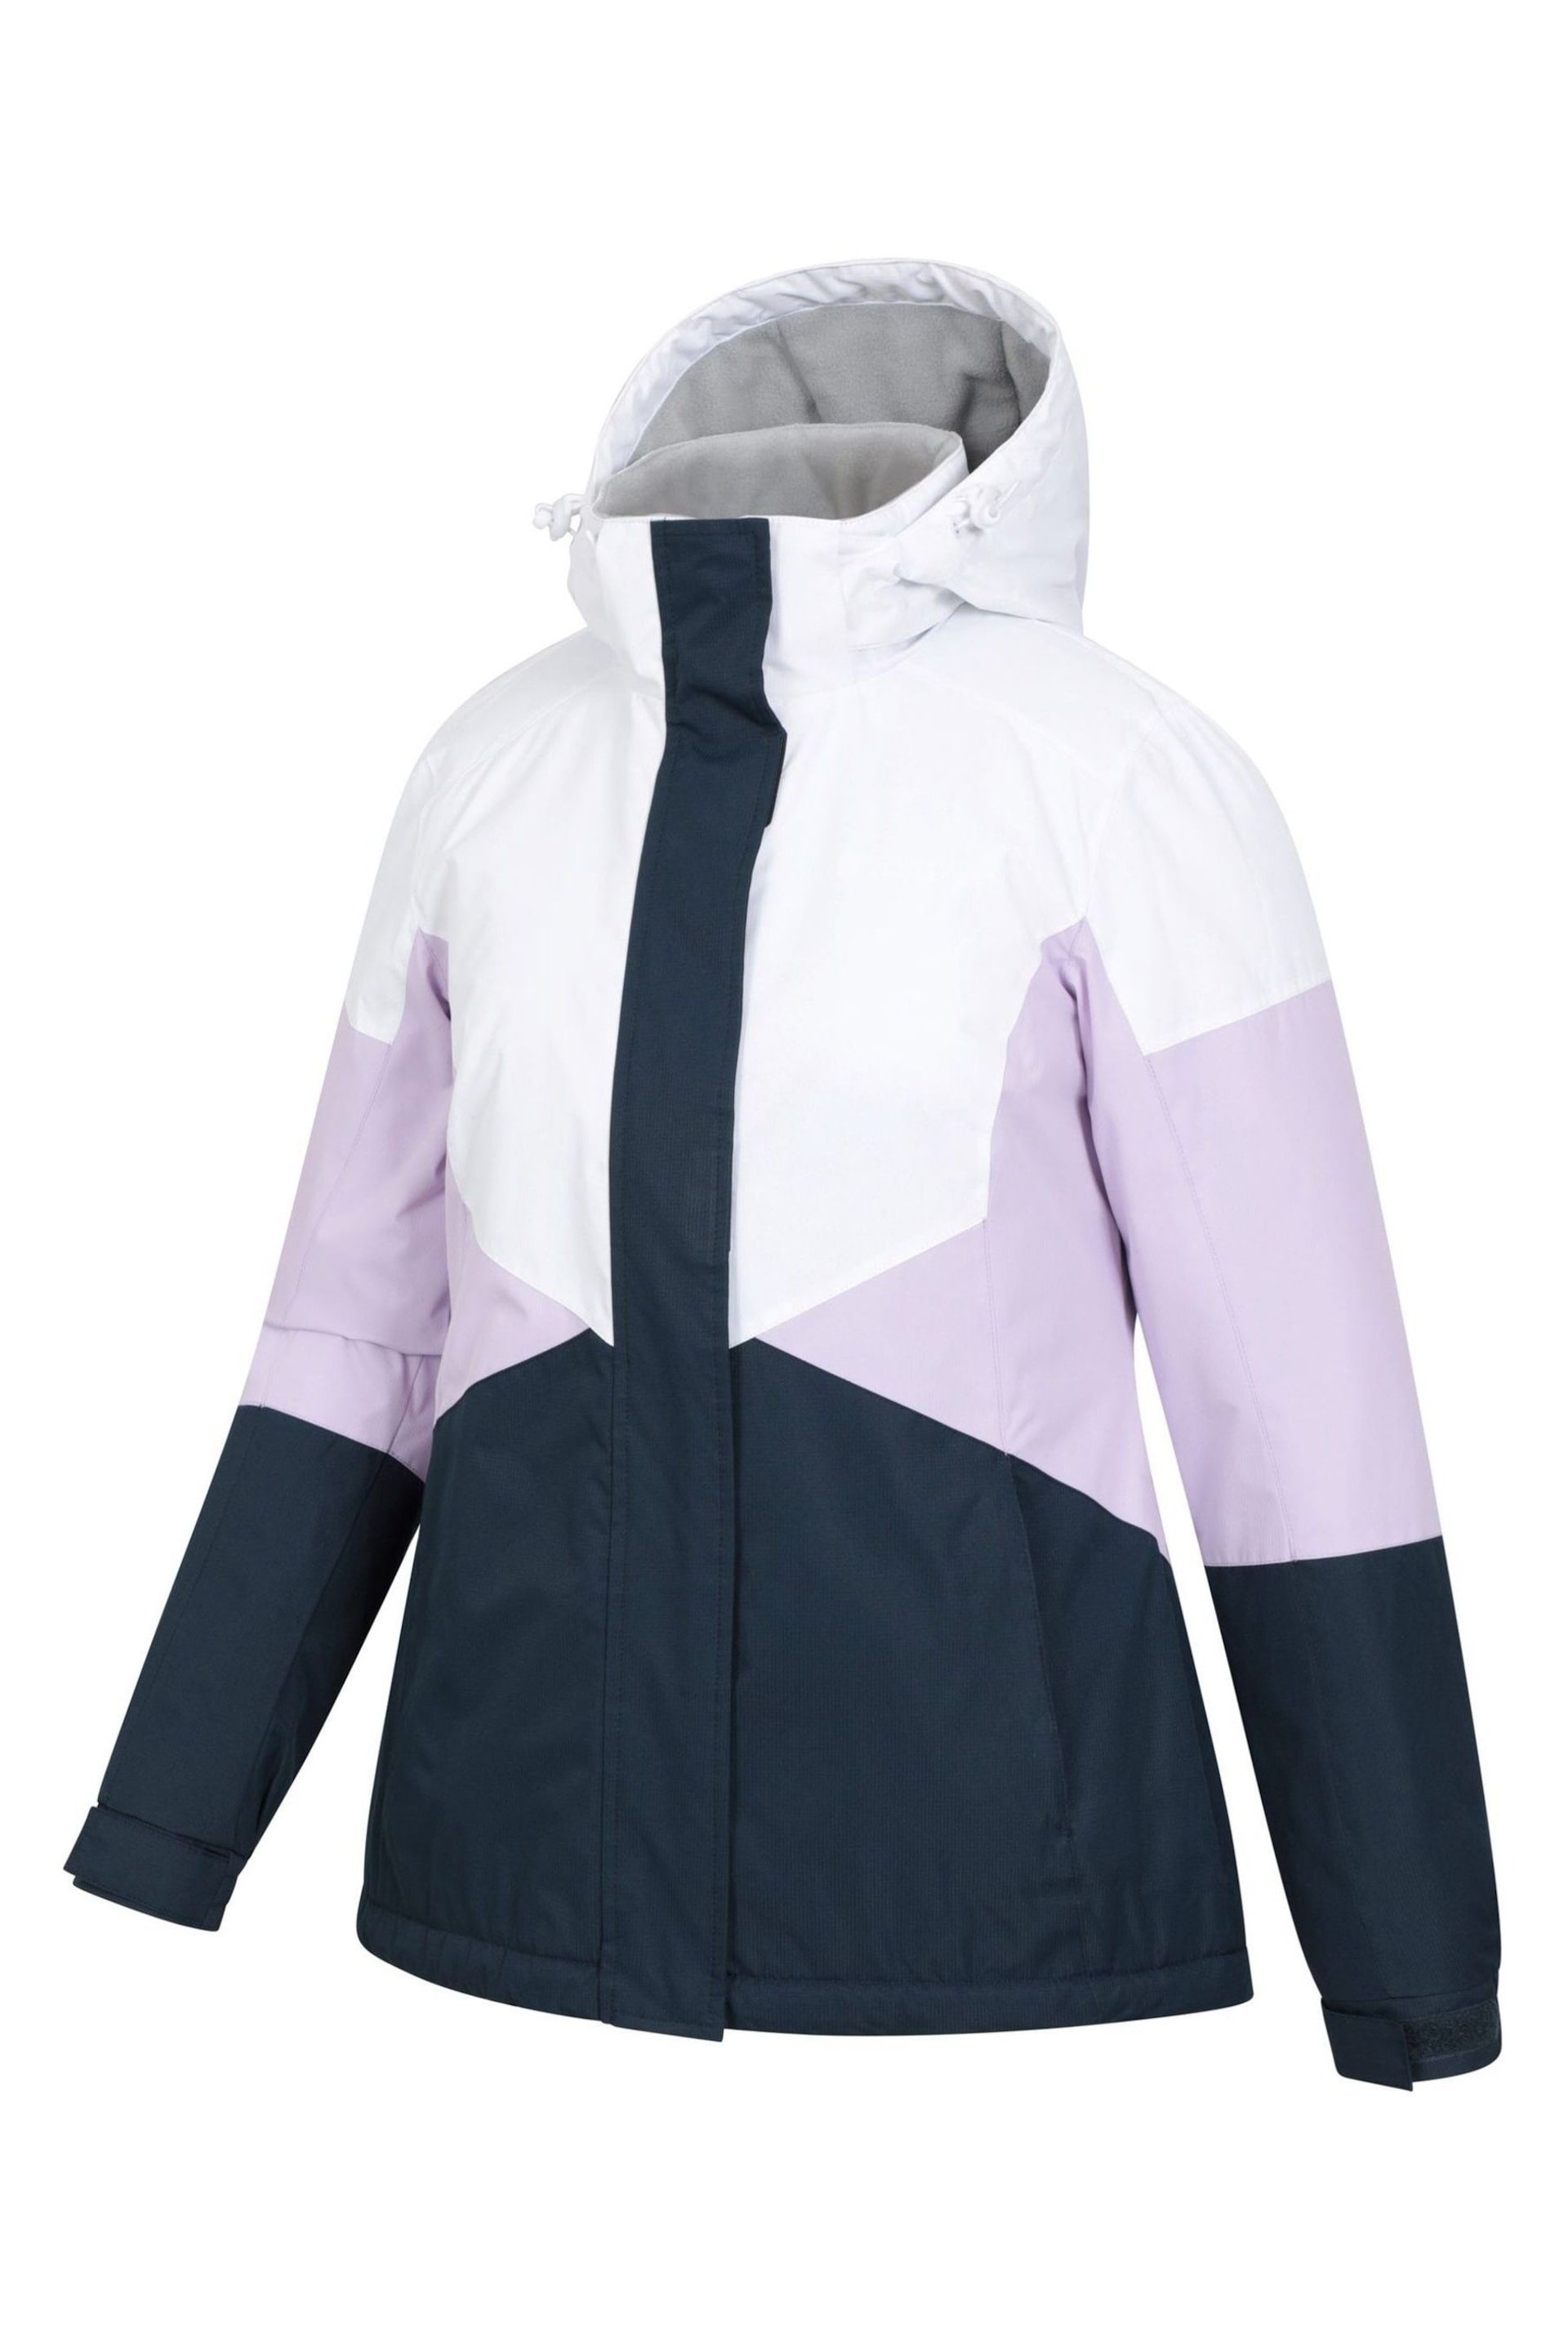 Mountain Warehouse Purple Moon II Womens Ski Jacket - Image 4 of 6